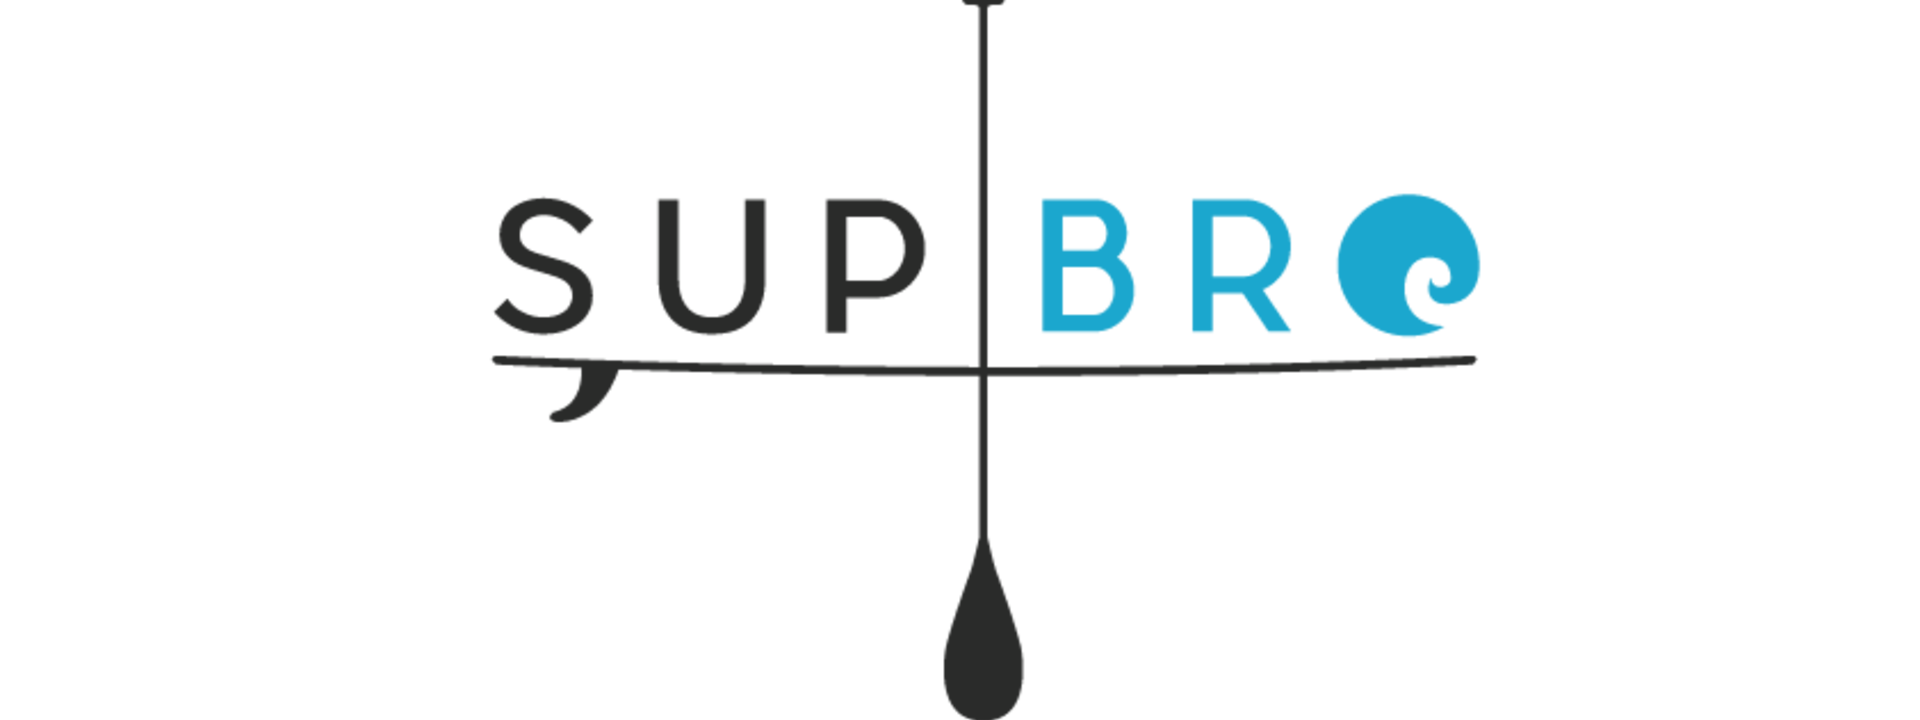 sup_bro_logo.png